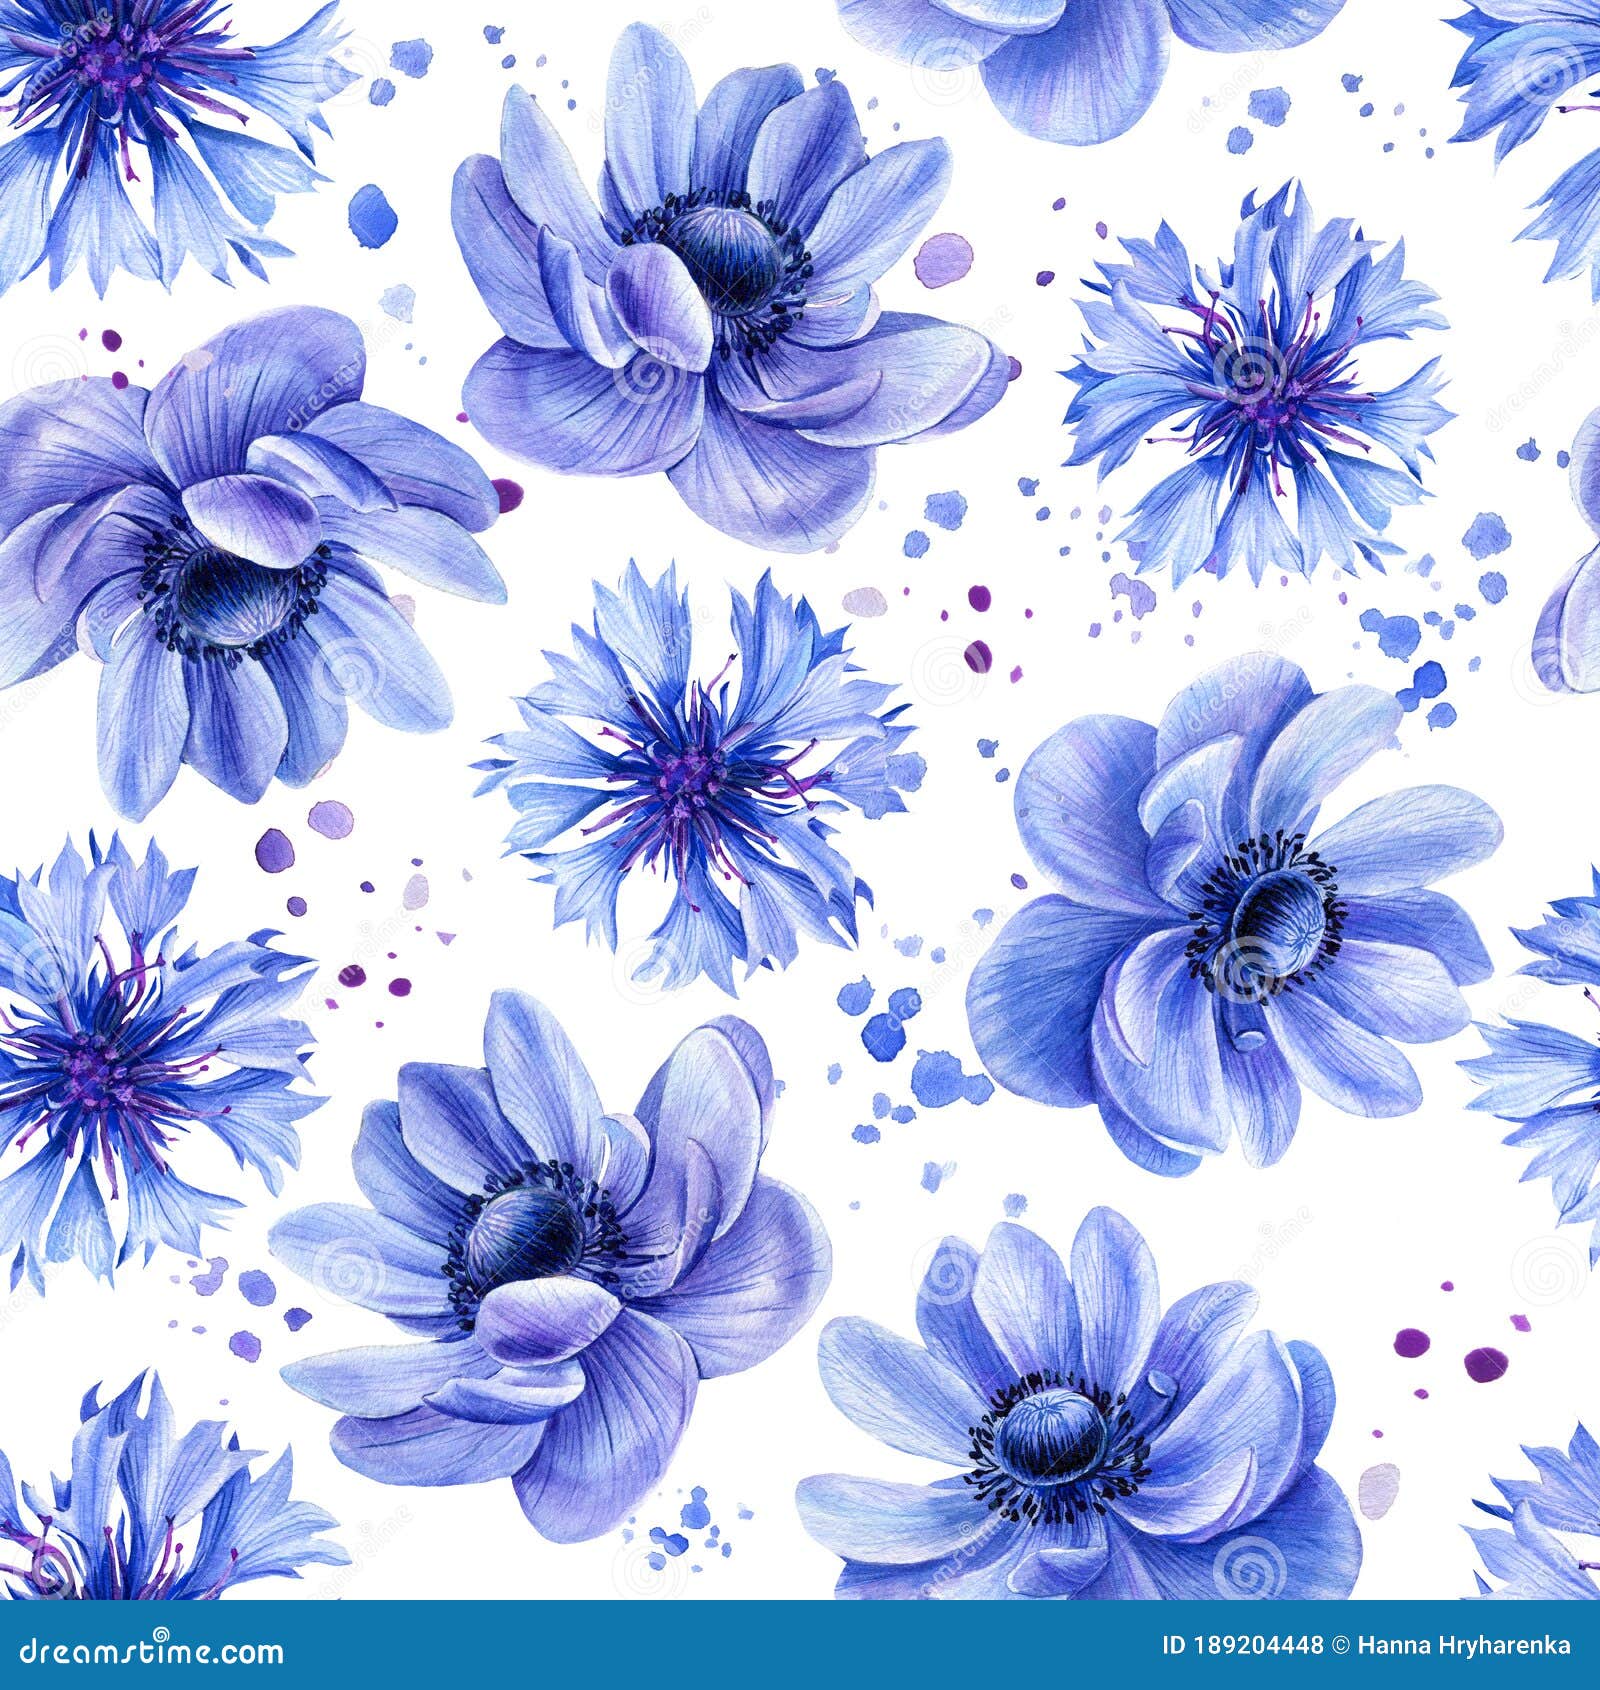 blue flower design wallpaper